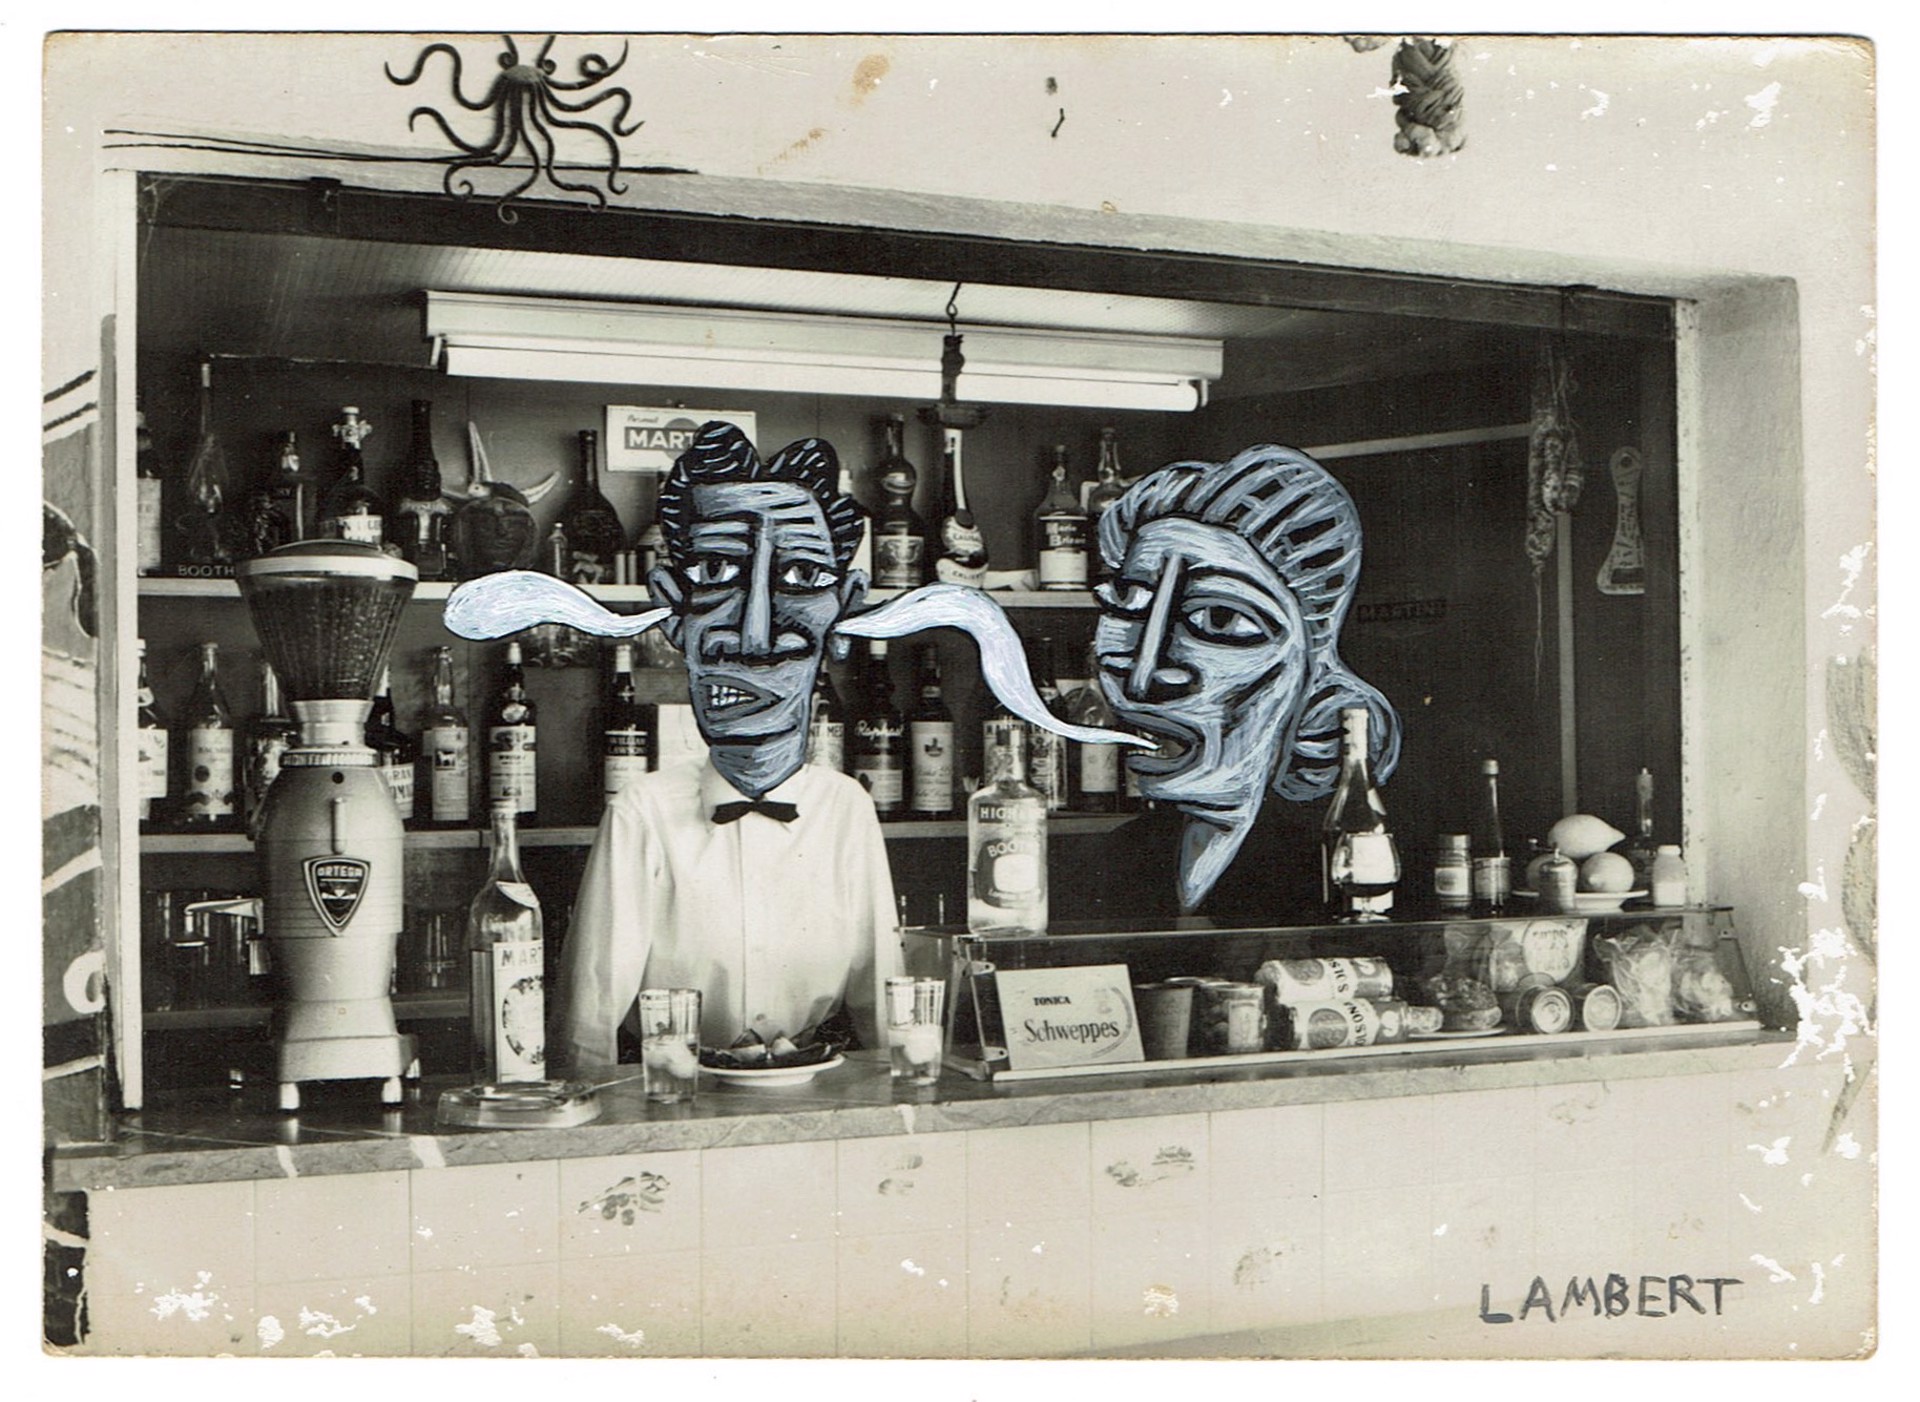 Behind the Bar by David Lambert